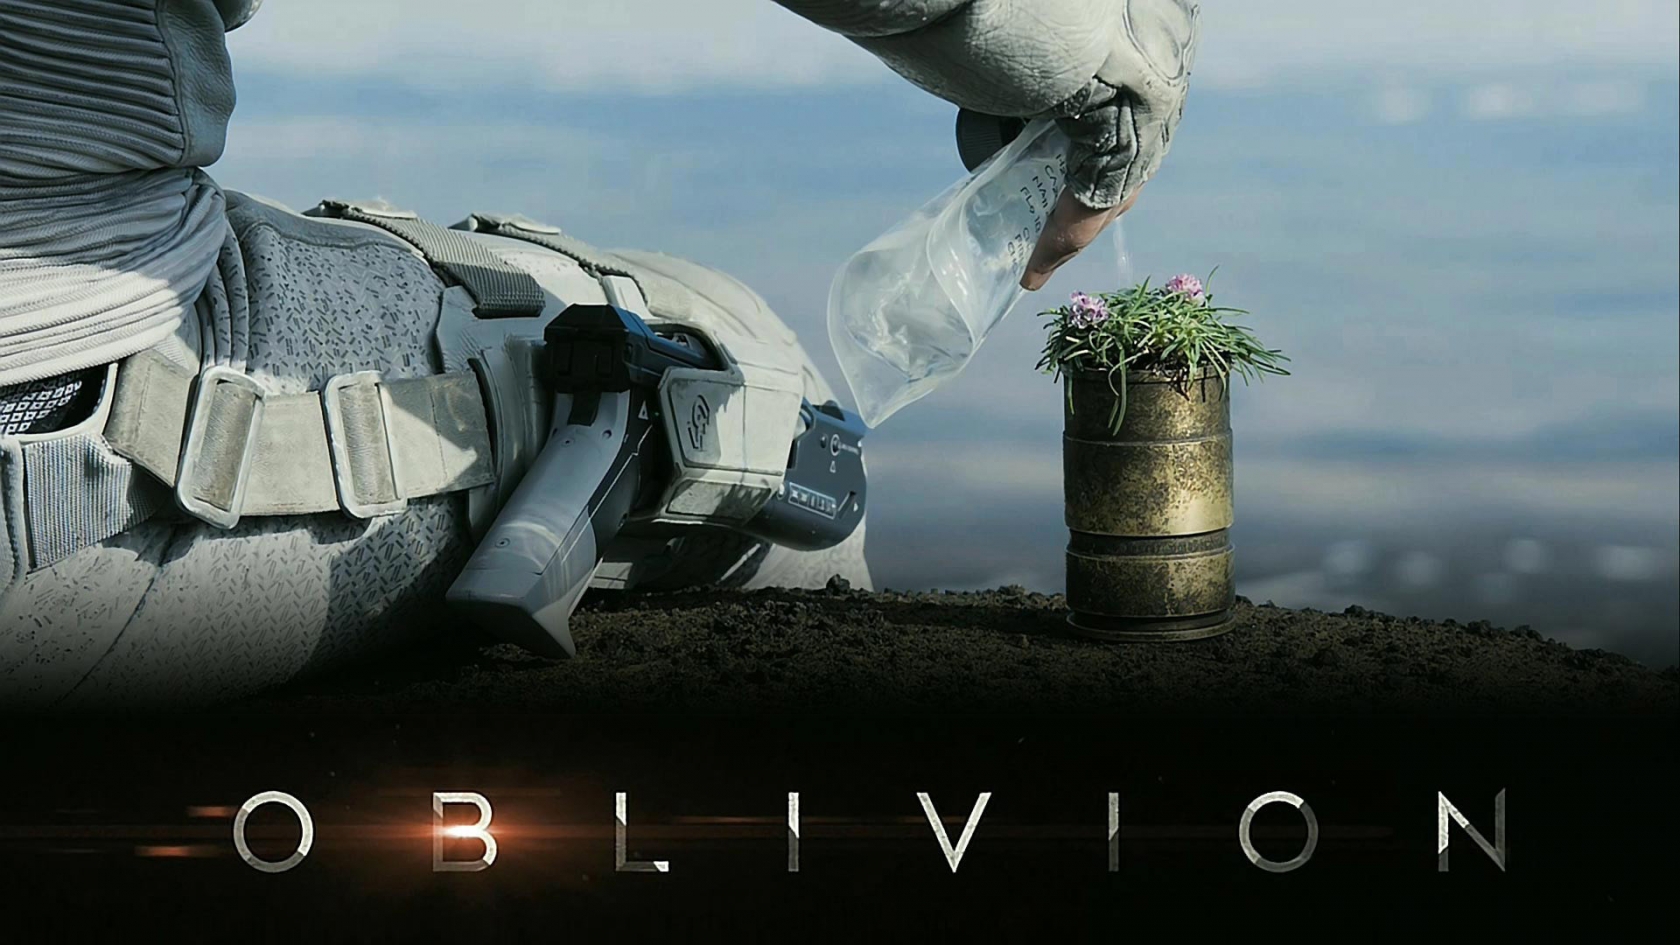 Oblivion 2013 for 1680 x 945 HDTV resolution